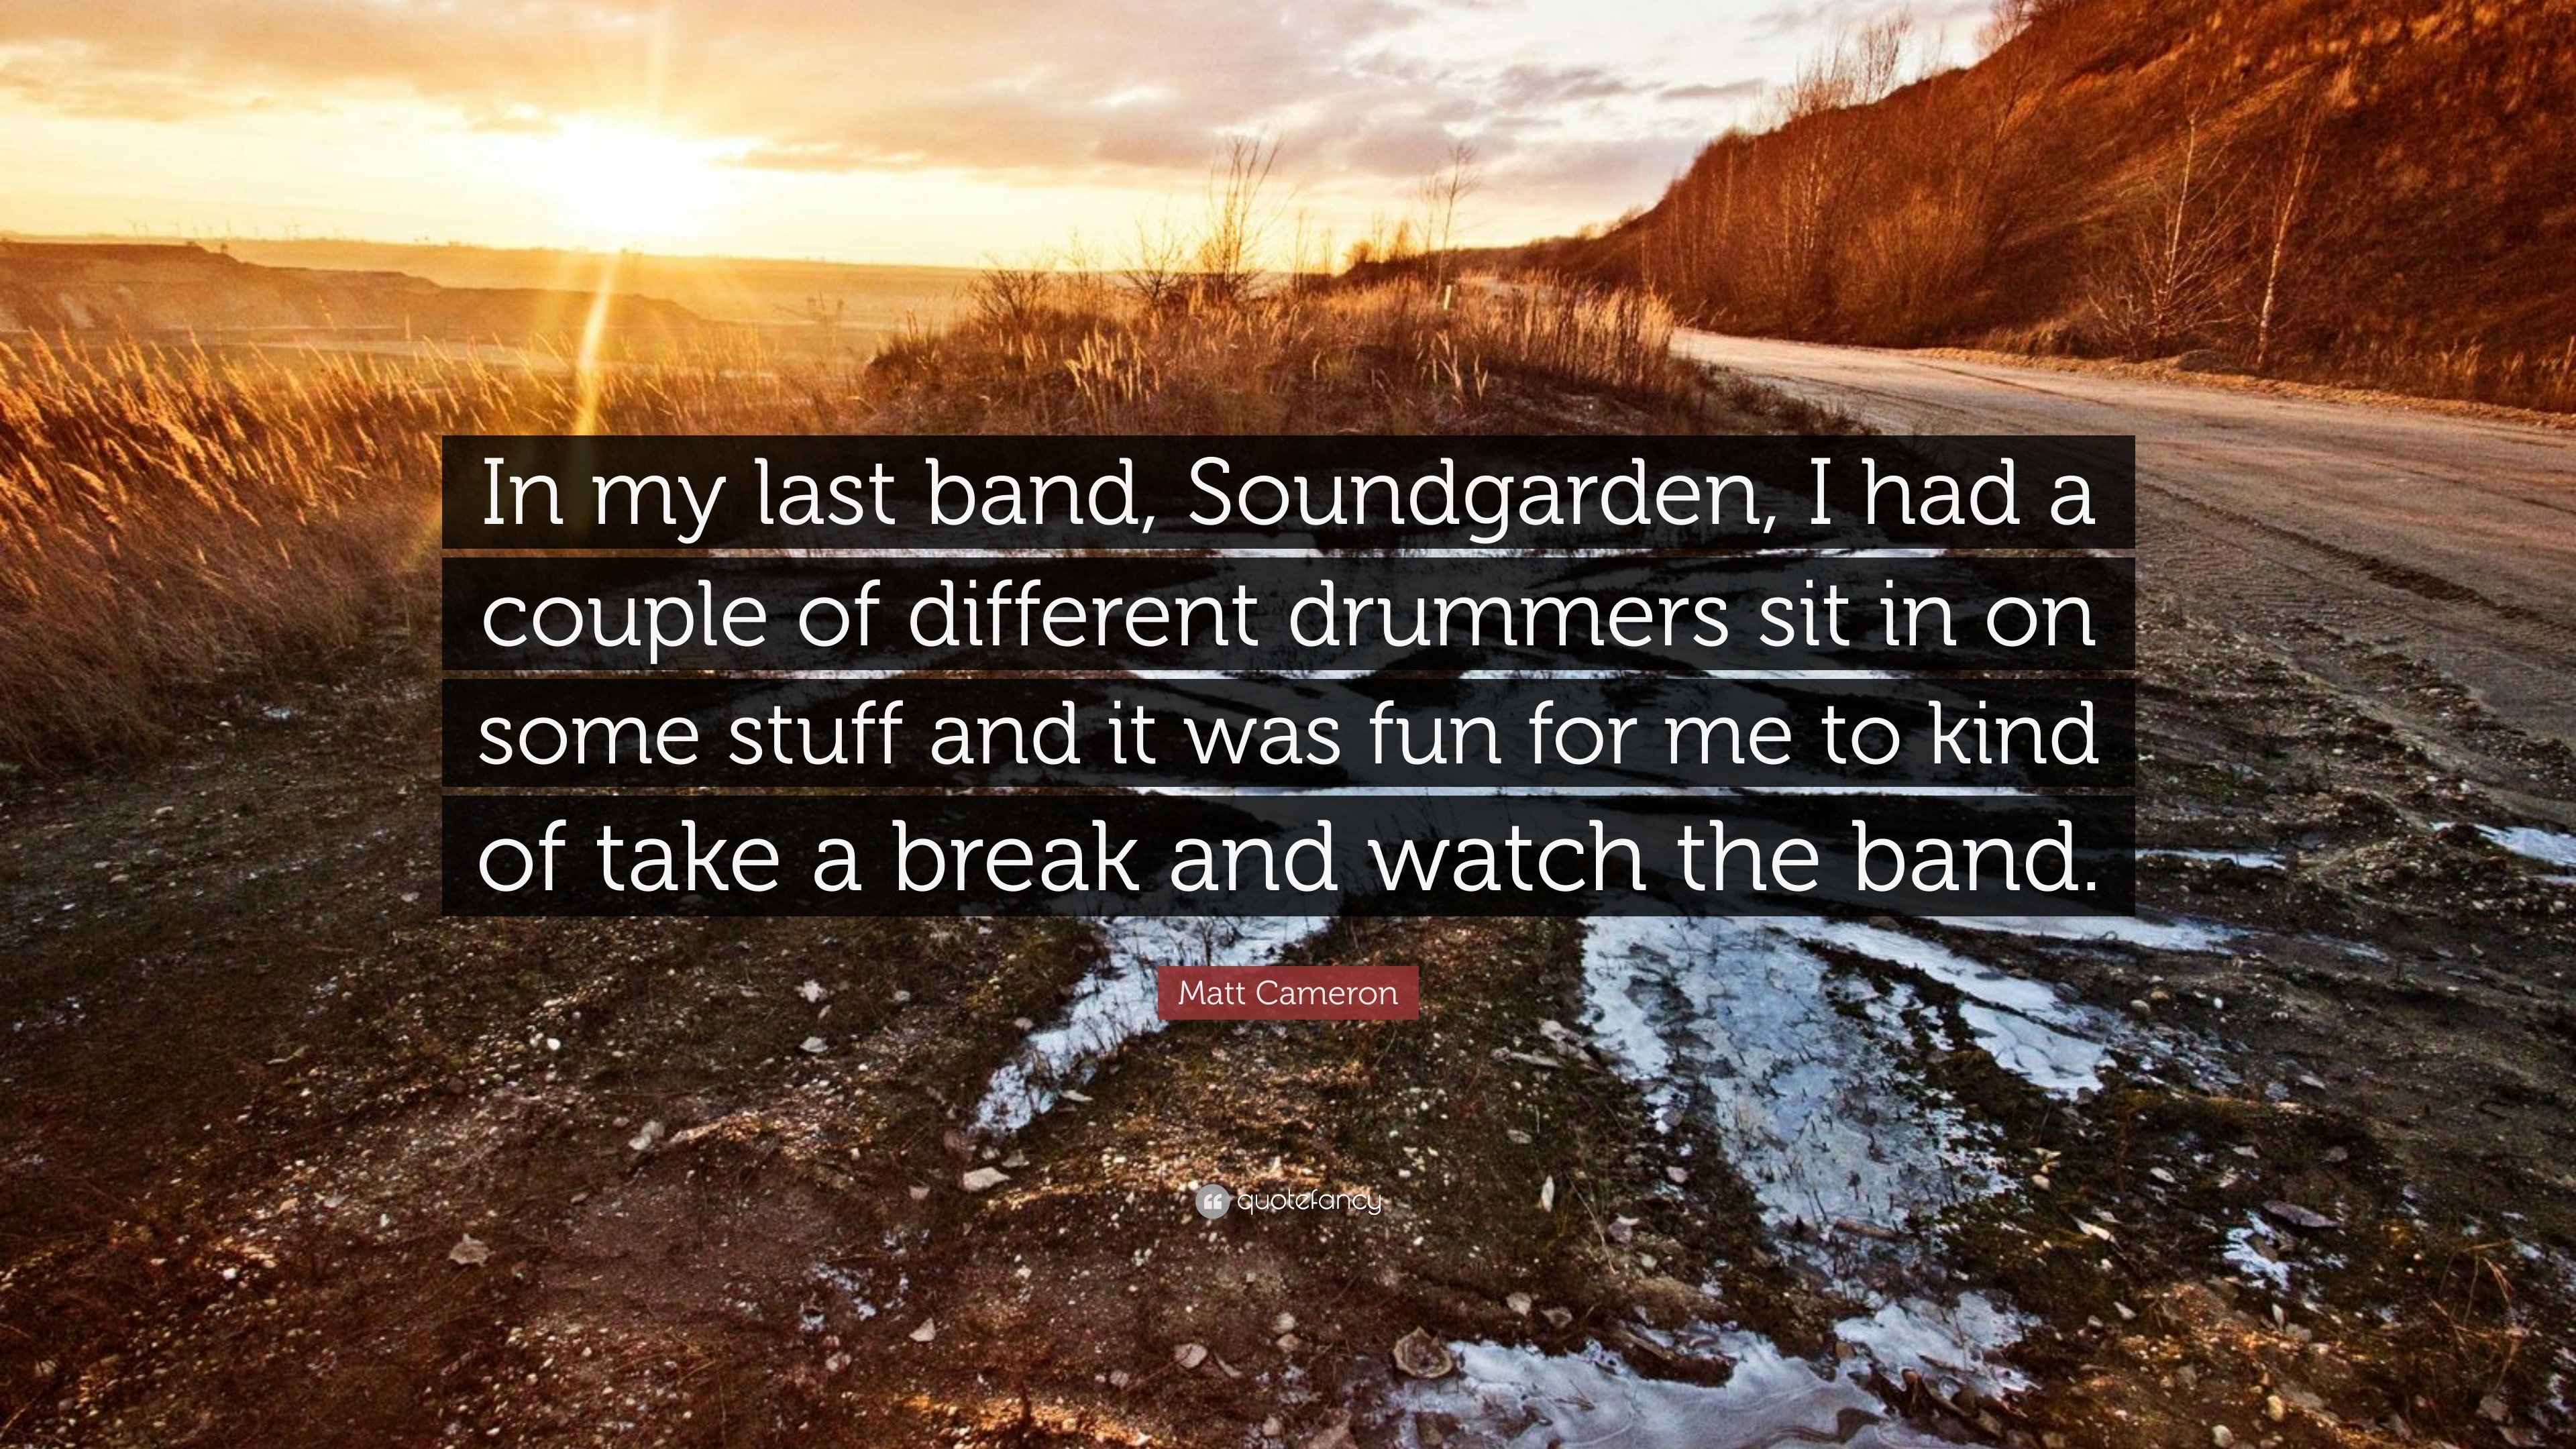 3840x2160 Matt Cameron Quote: “In my last band, Soundgarden, I had a couple